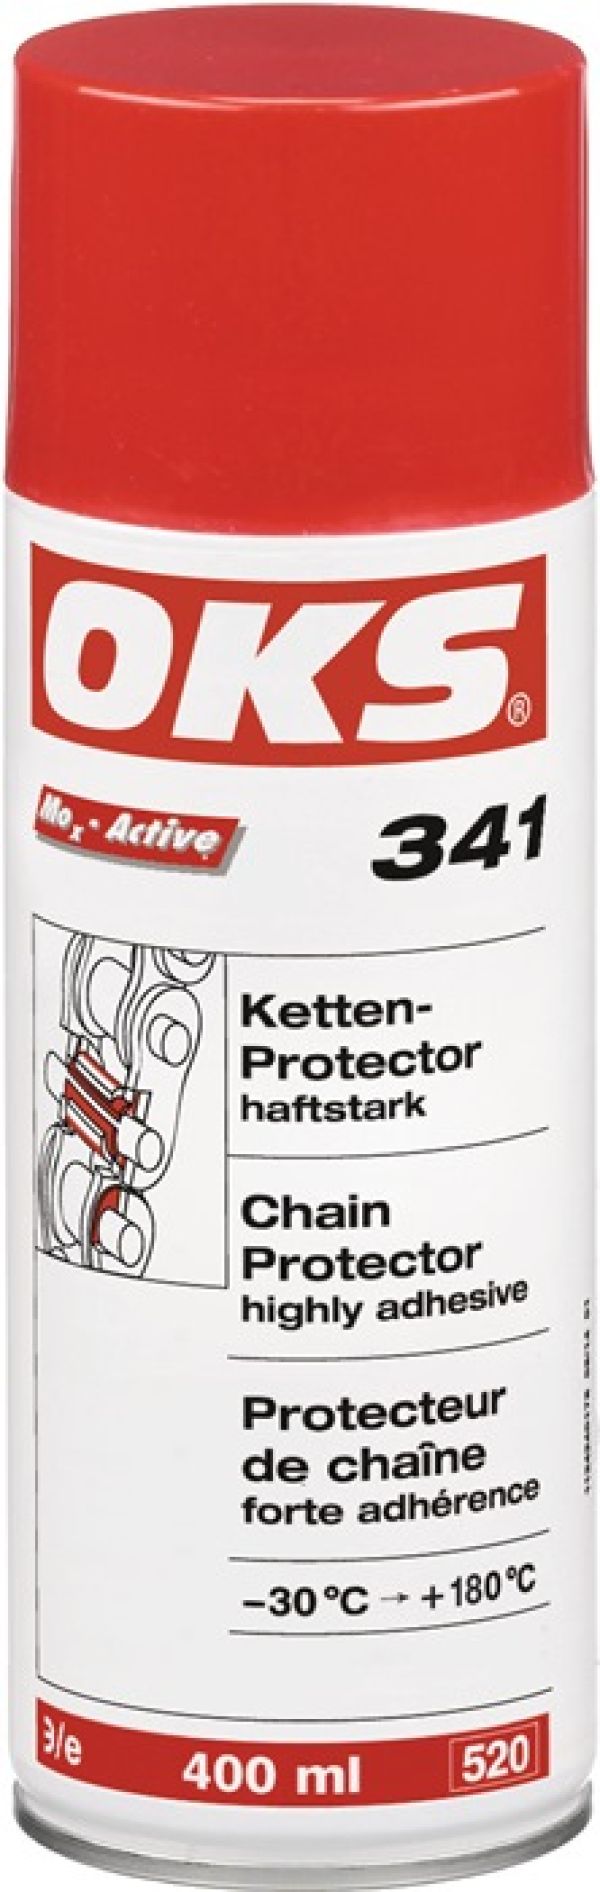 Ketten-Protektor OKS 341 400ml grünlich Spraydose OKS